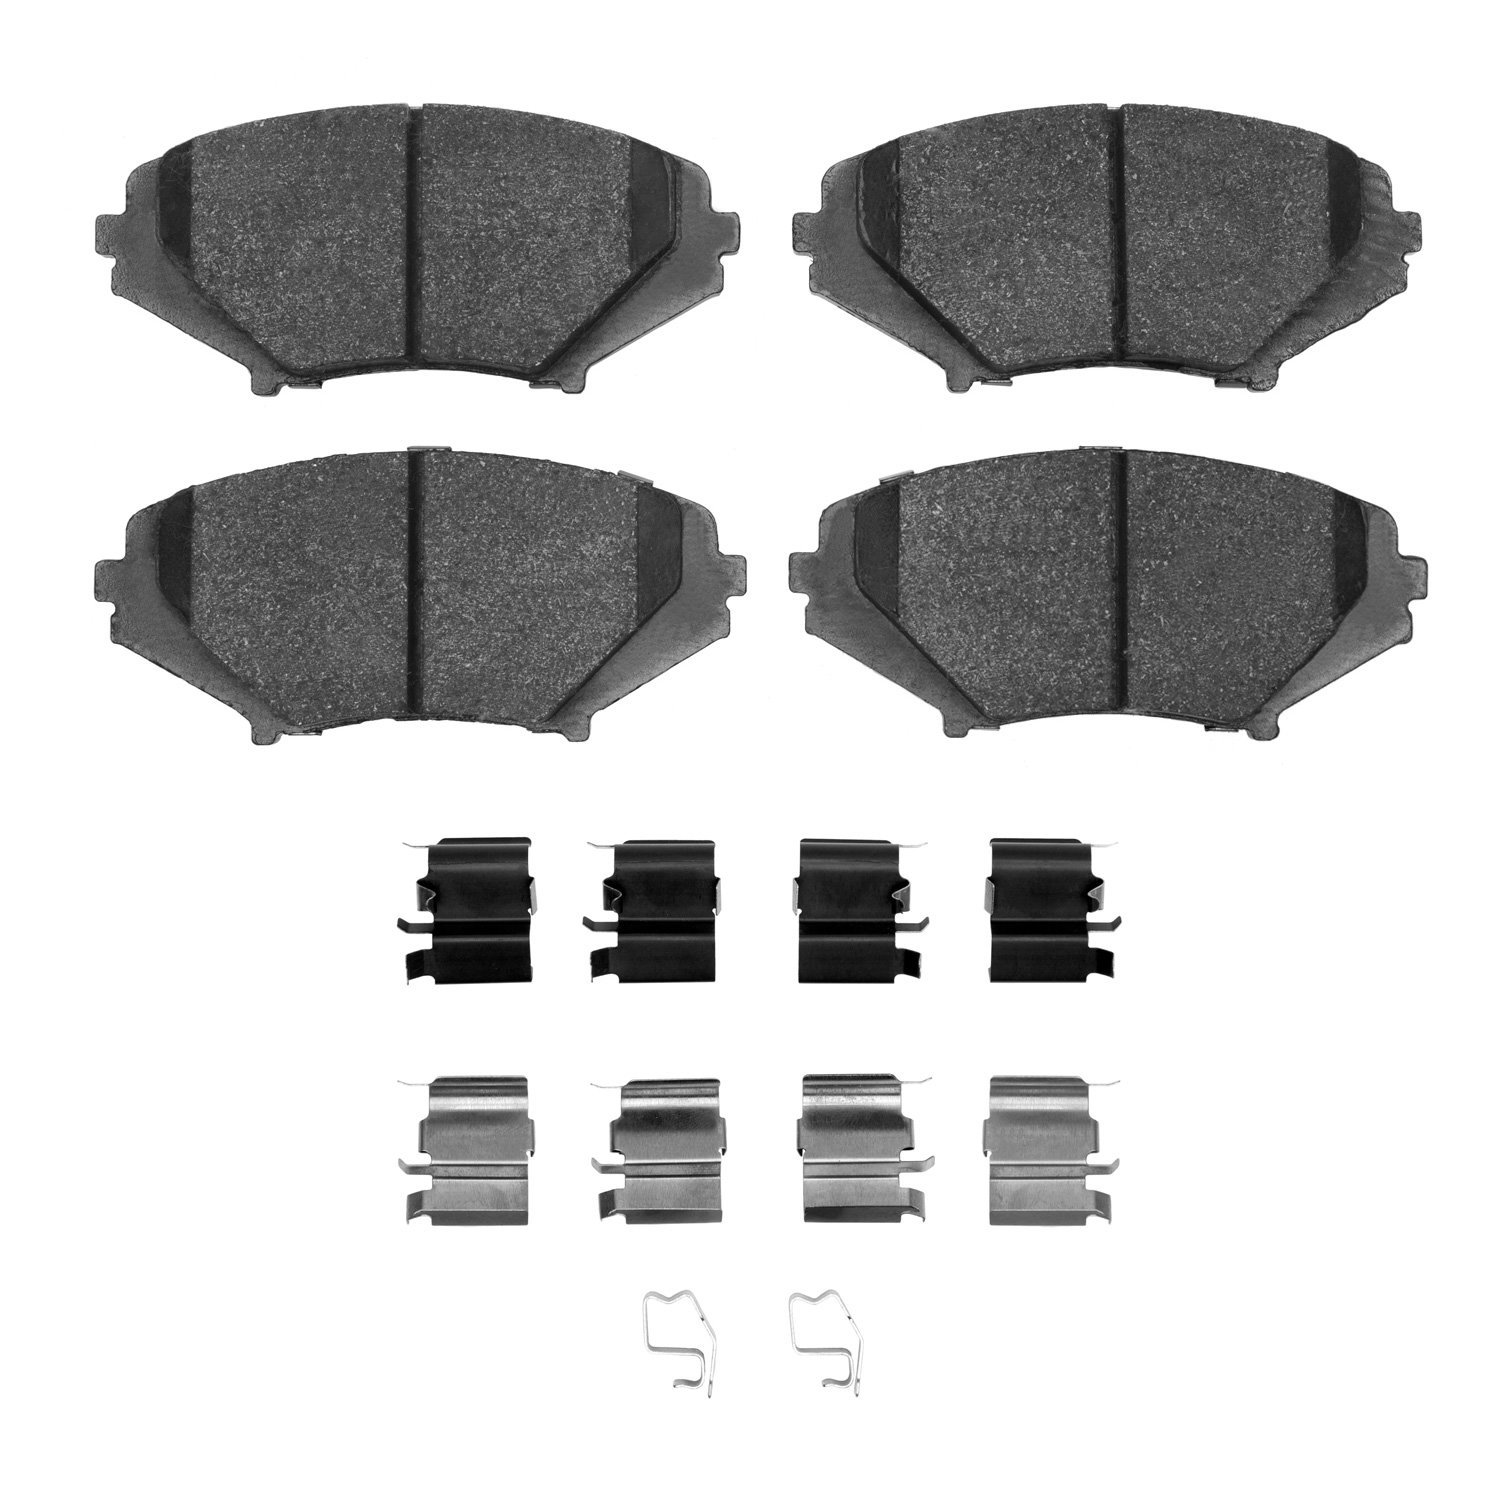 1310-1009-01 3000-Series Ceramic Brake Pads & Hardware Kit, 2004-2011 Ford/Lincoln/Mercury/Mazda, Position: Front